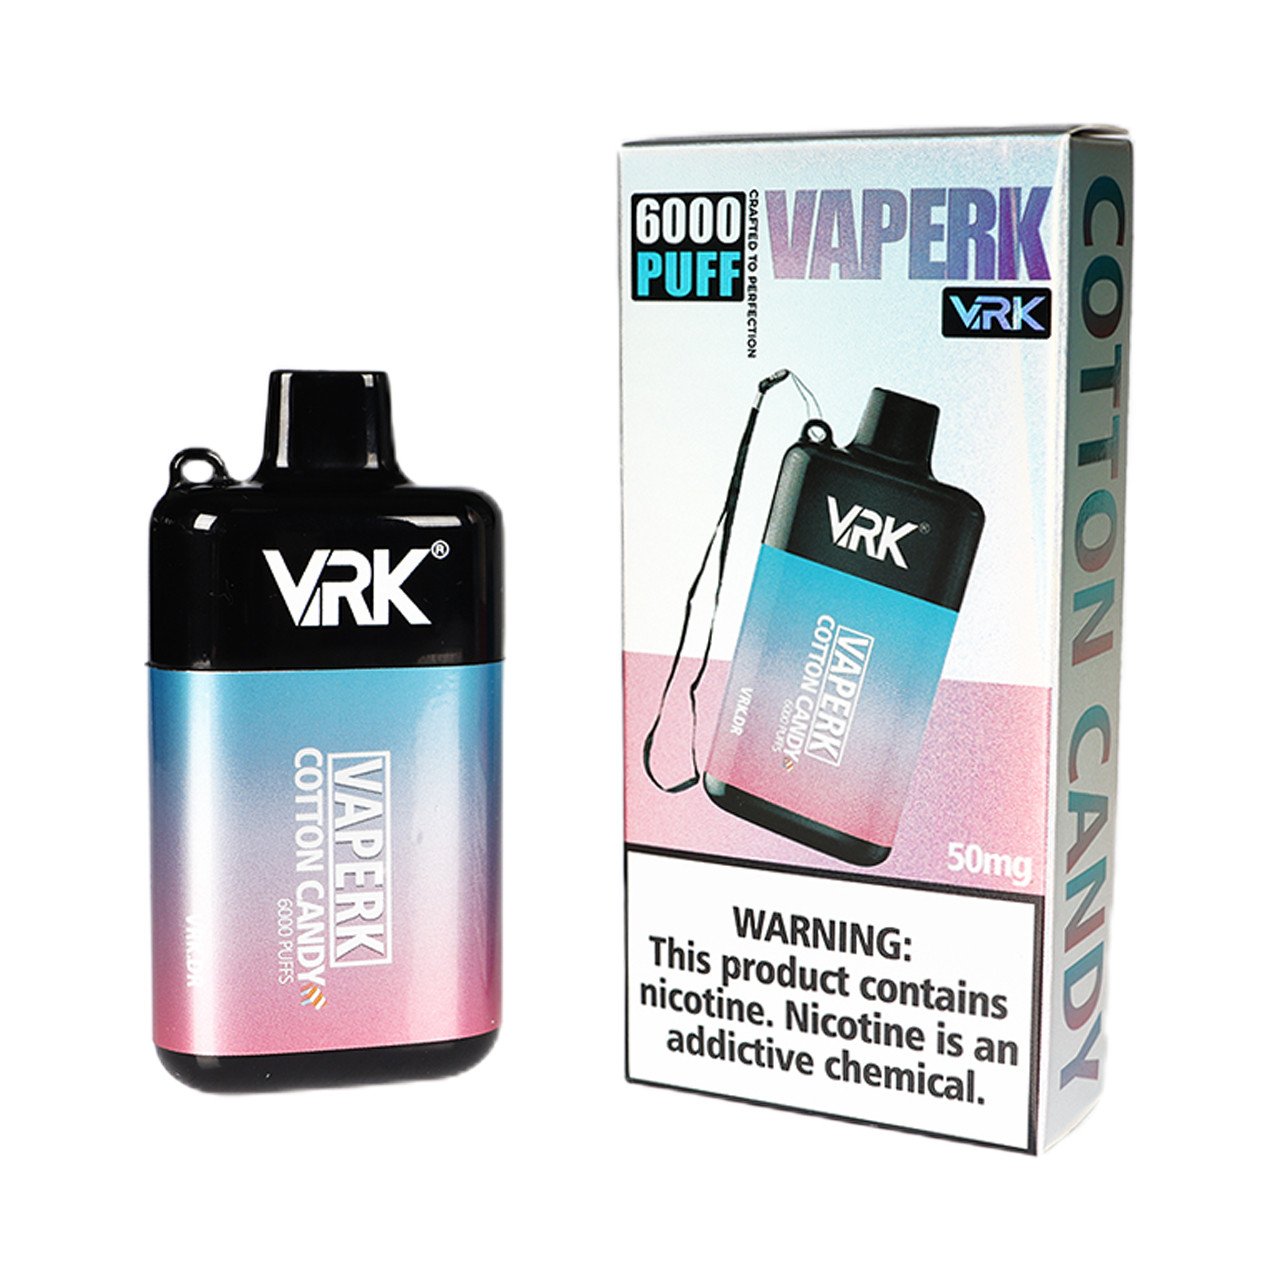 VRK Vaperk Disposable Device (6000 Puffs)-Cotton Candy